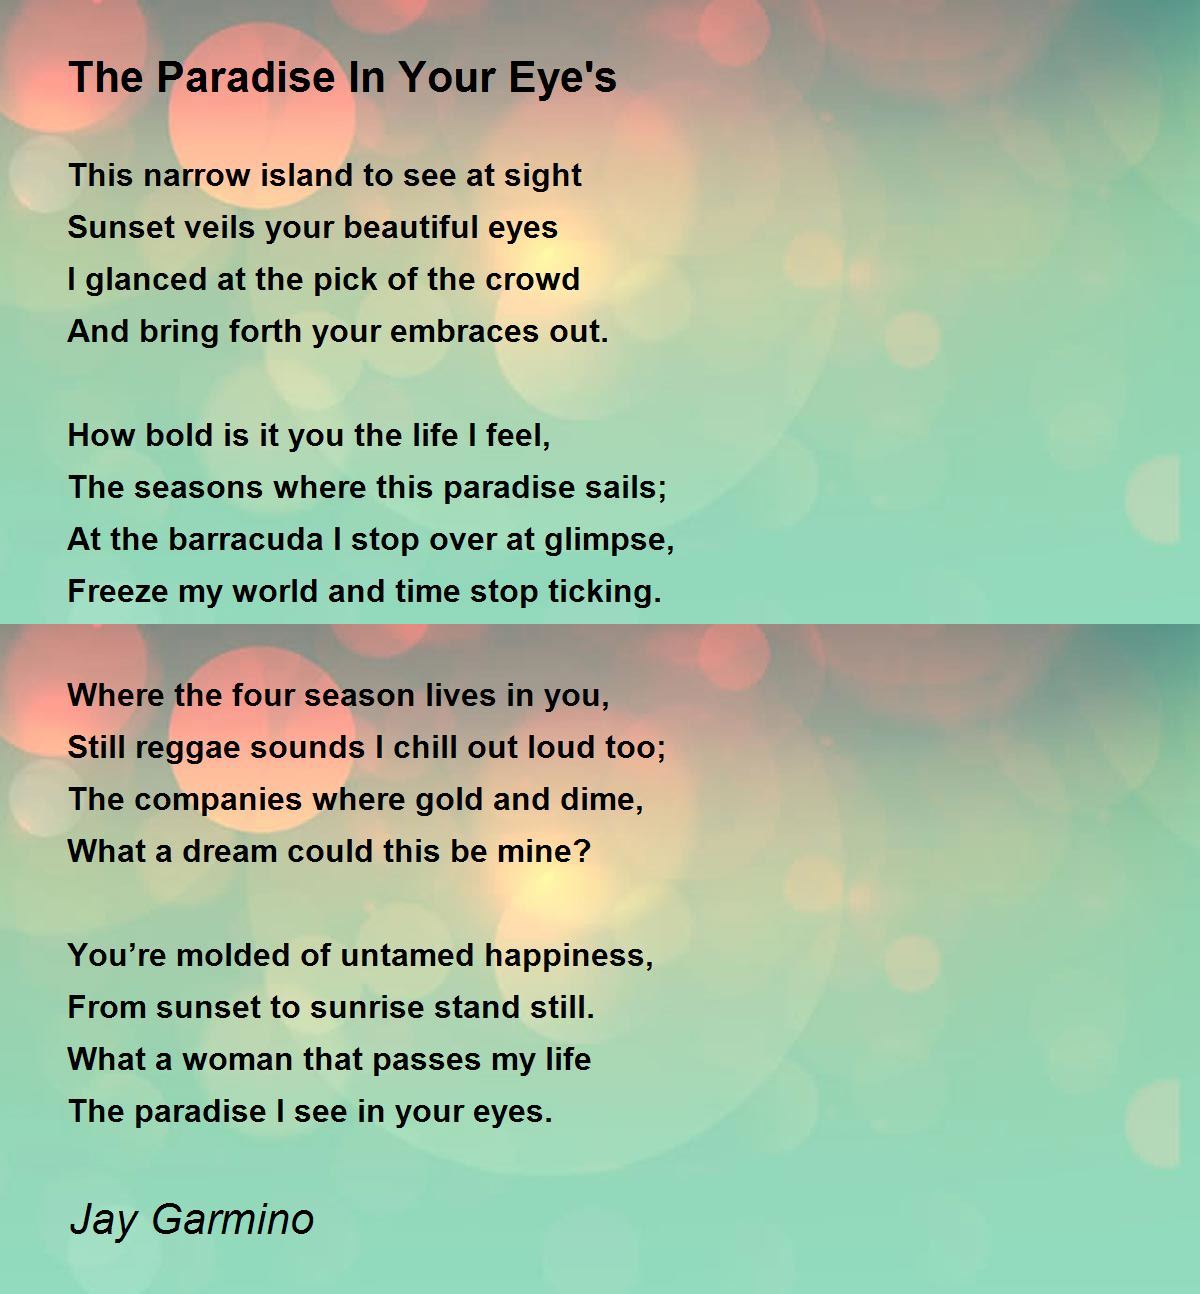 The Dark Side Of Paradise Lyrics - The Besnard Lakes - Only on JioSaavn